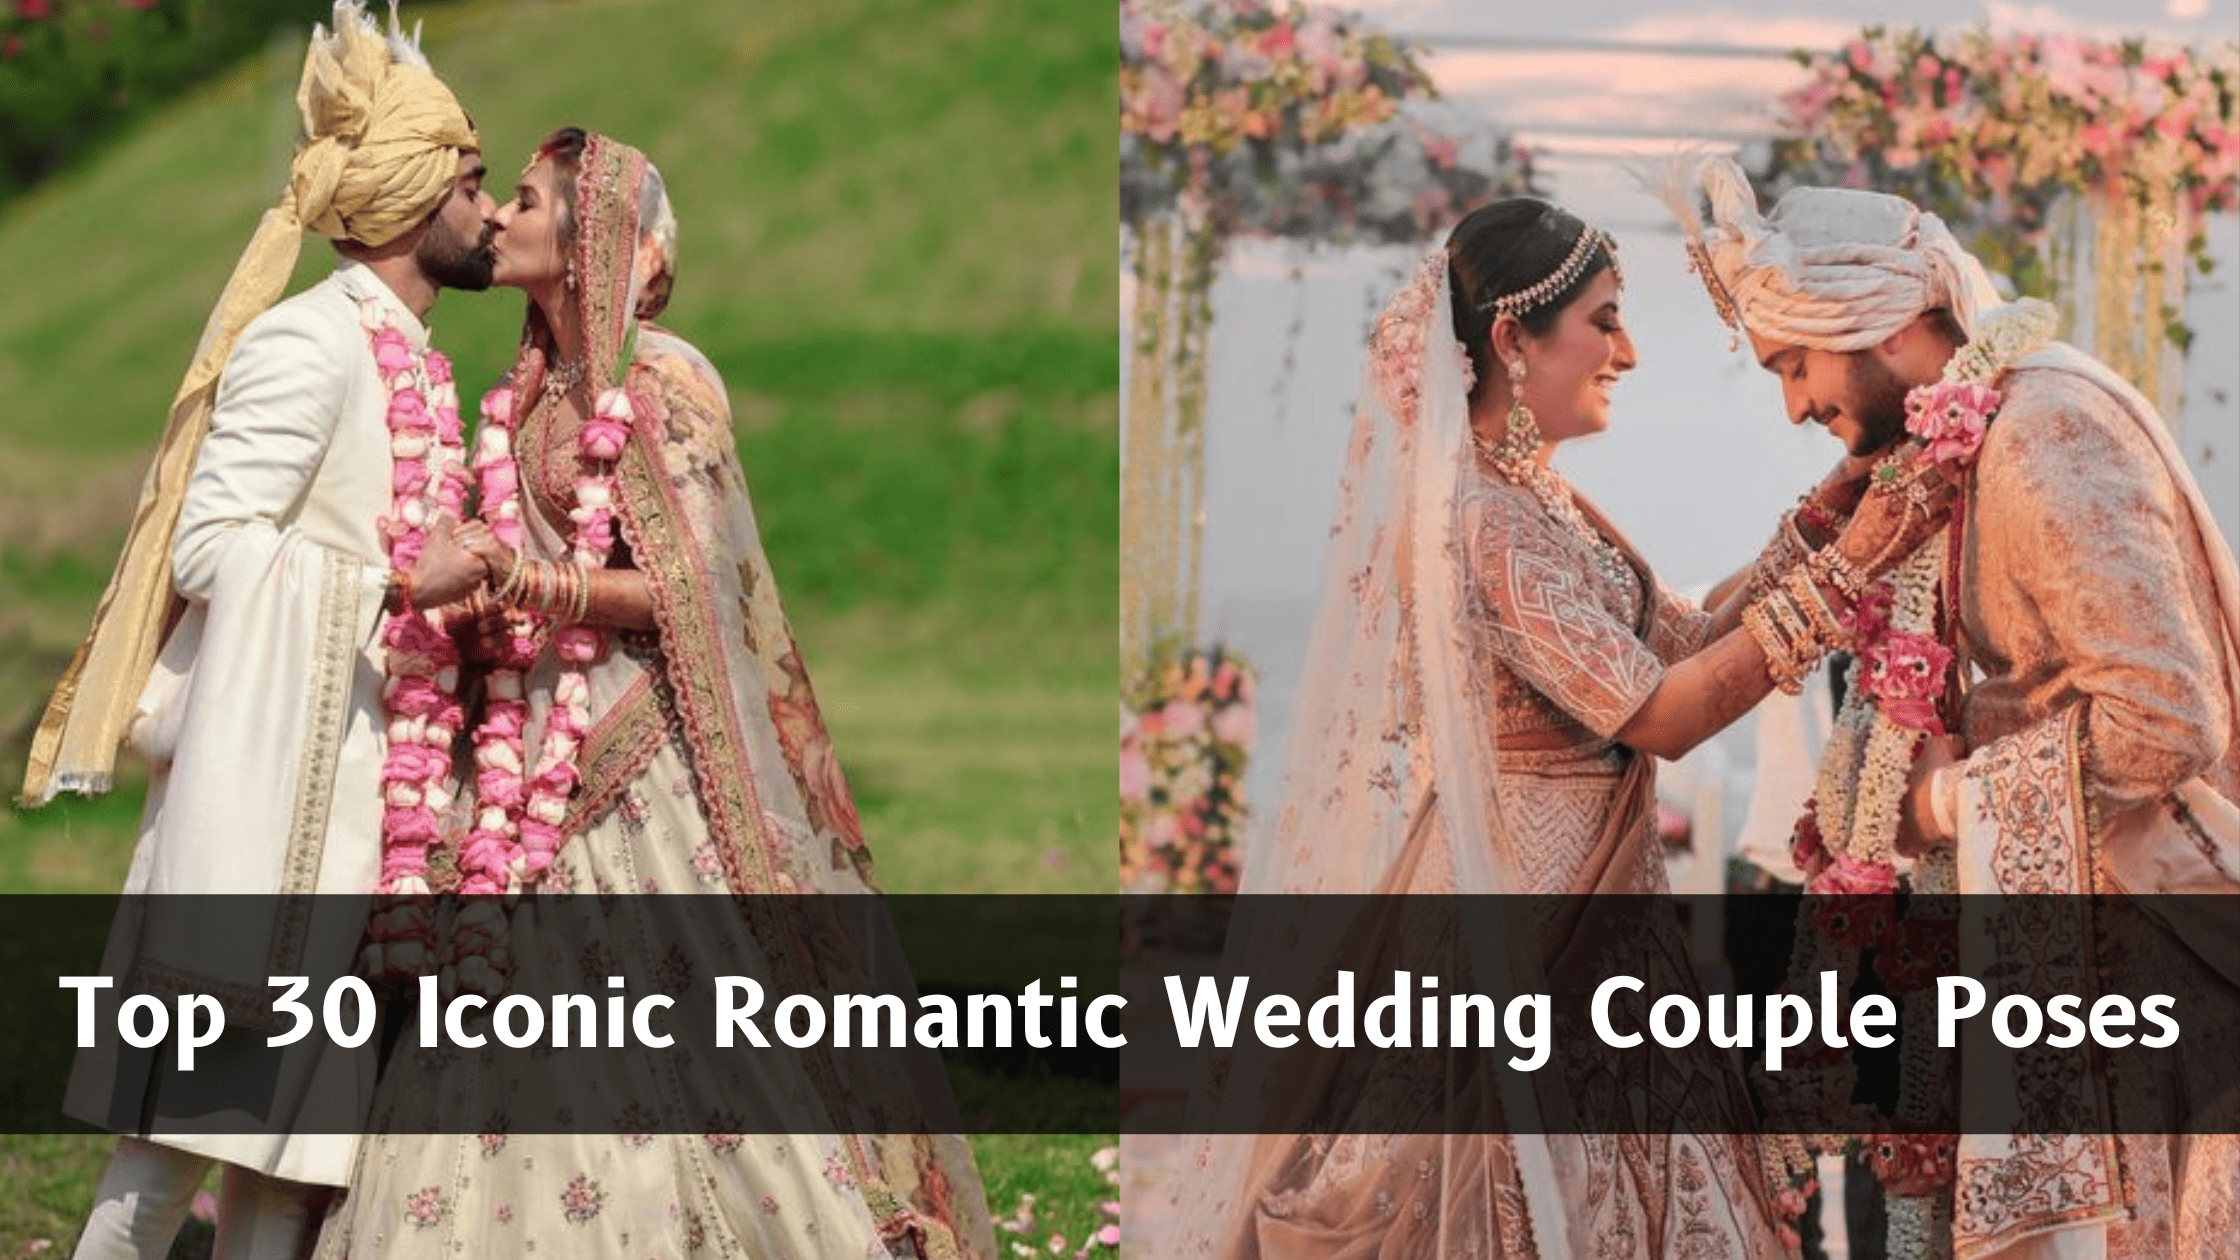 Bridal Saree | Indian wedding photography poses, Couple photoshoot poses,  Photo poses for couples